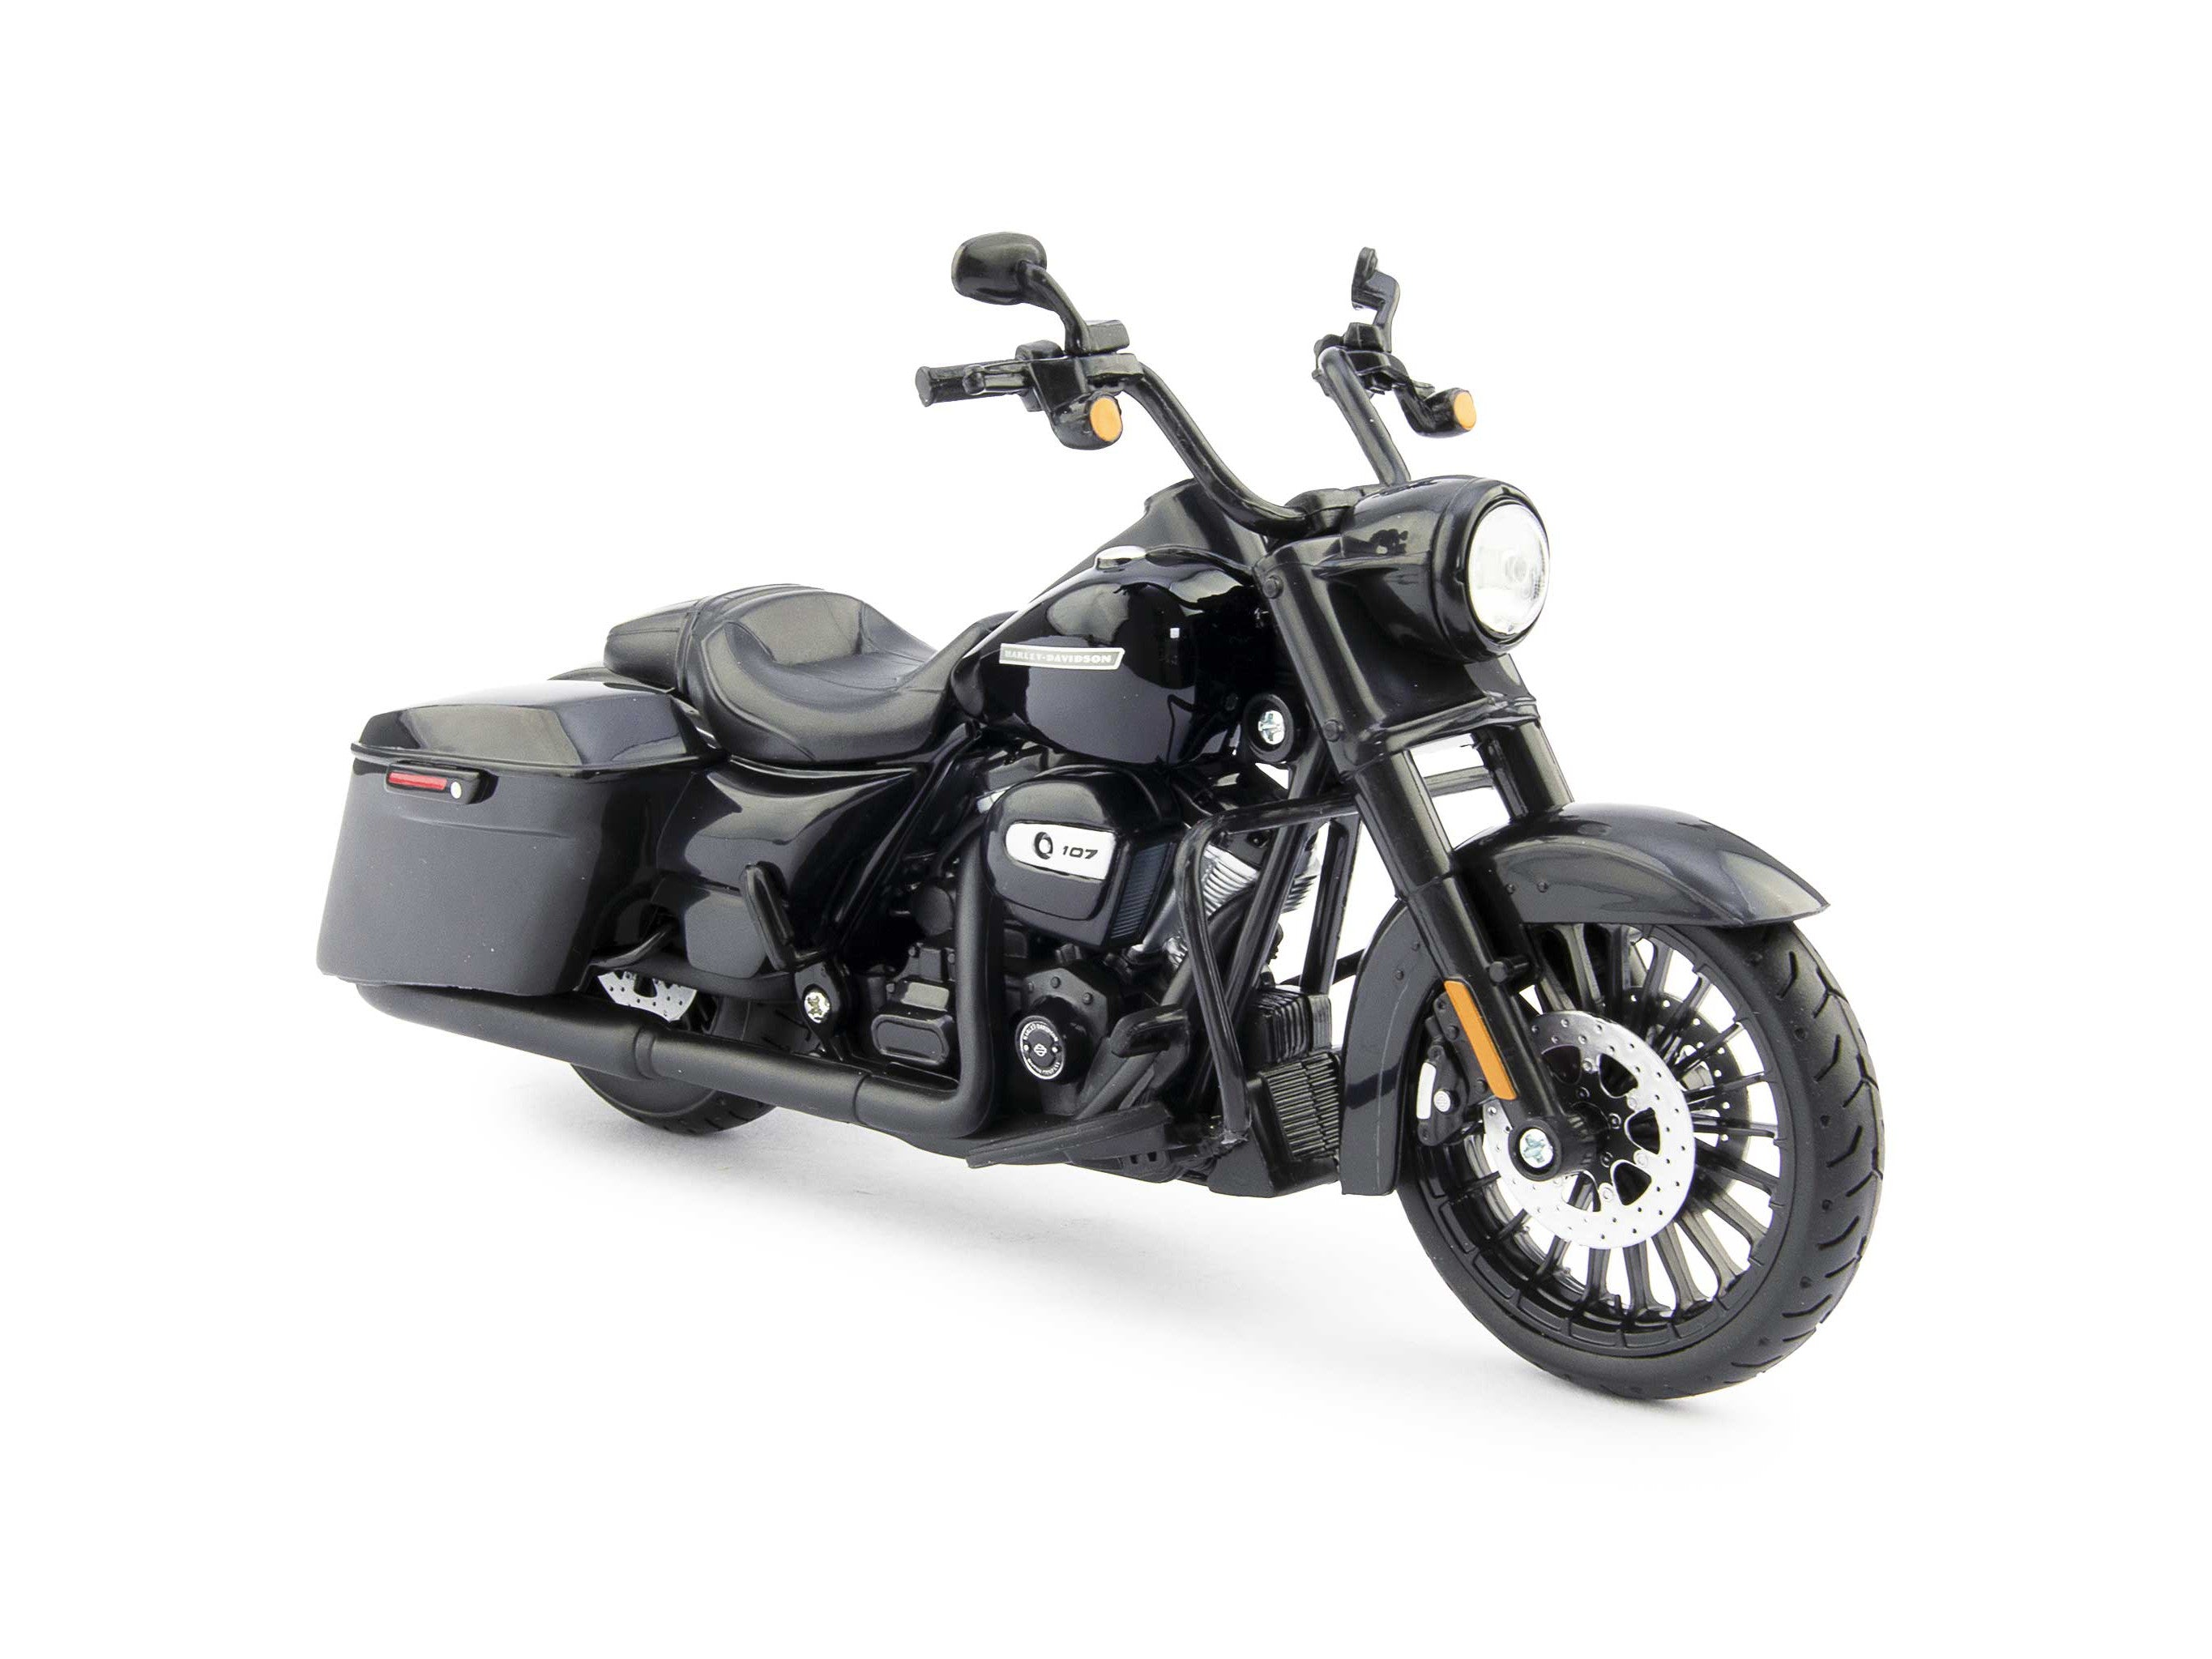 Maisto 1/12 Harley Davidson Street Glide Toy Motorcycle Black